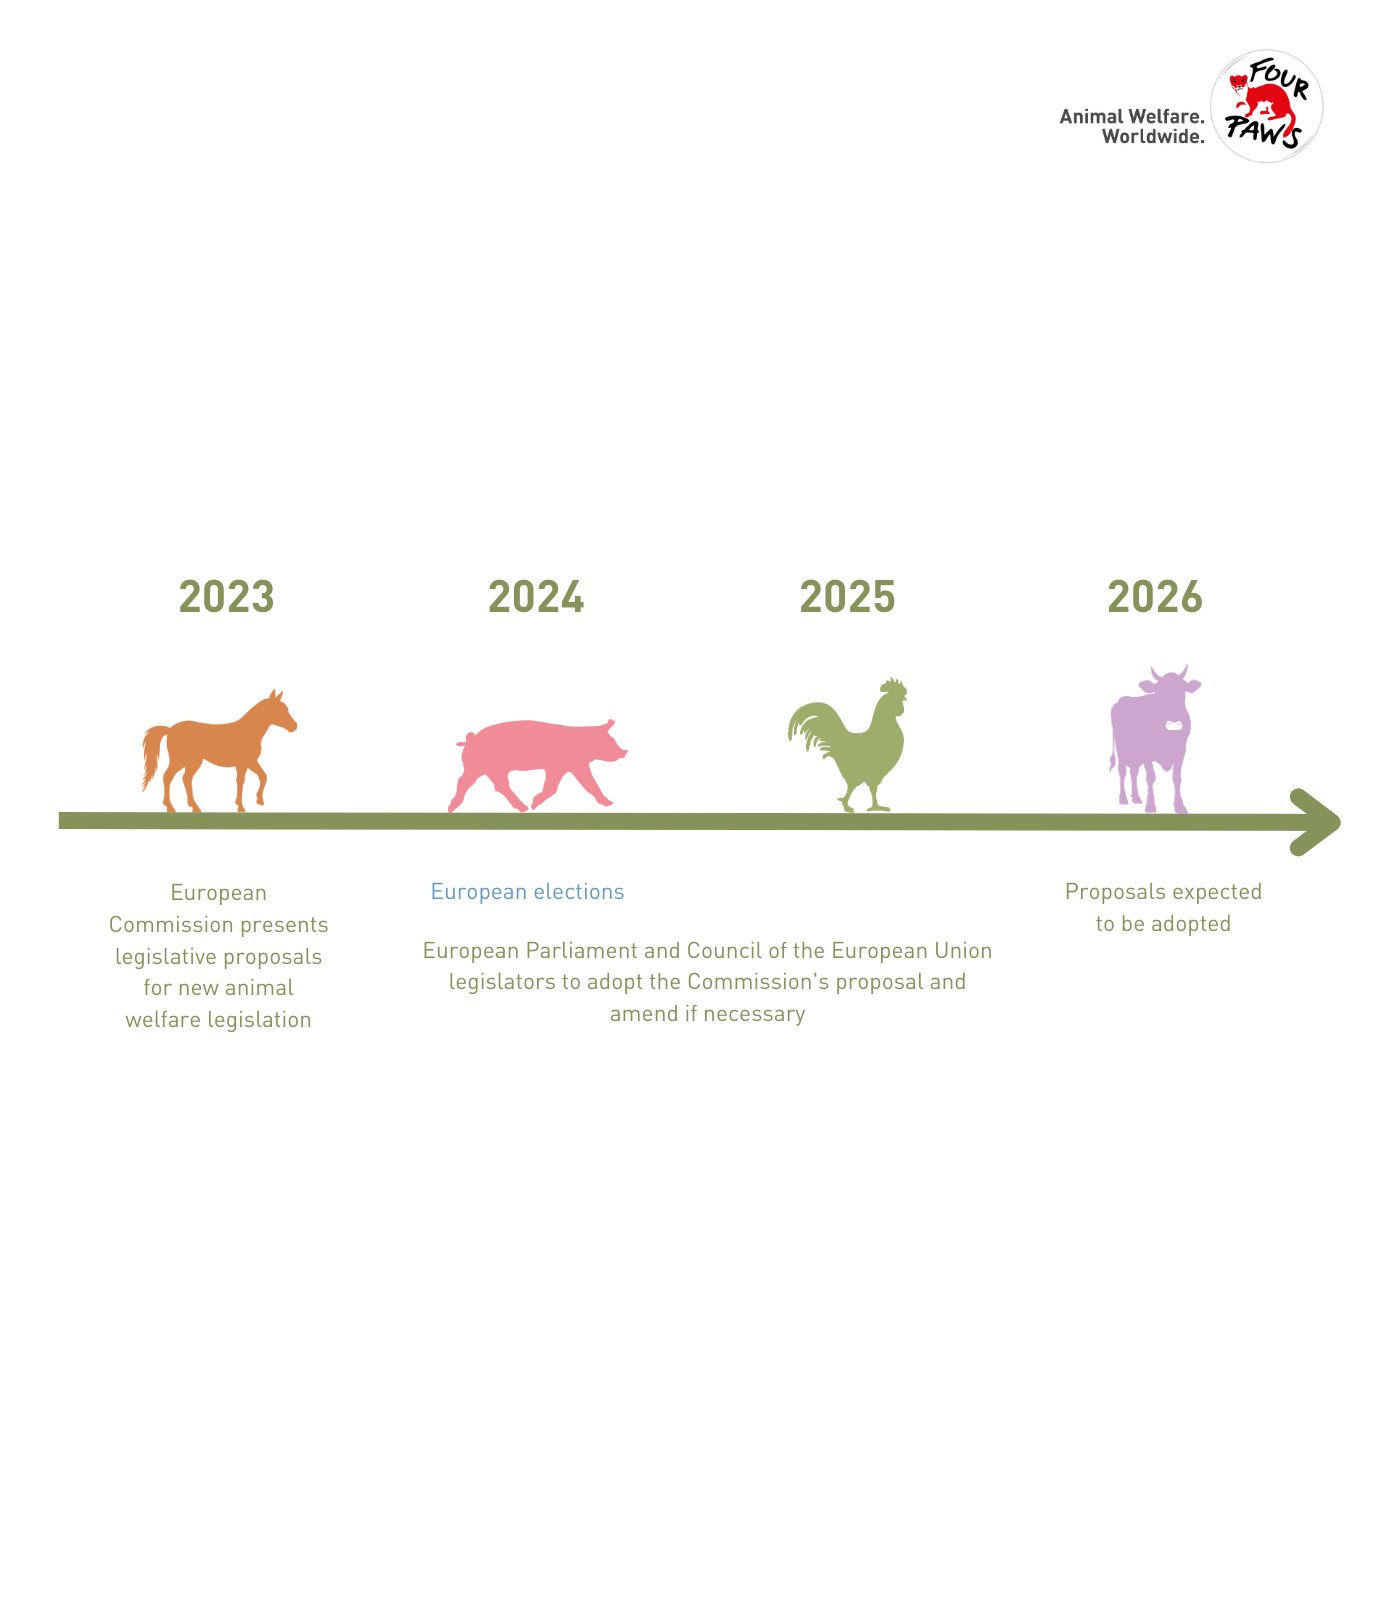 Animal Welfare Proposal Timeline